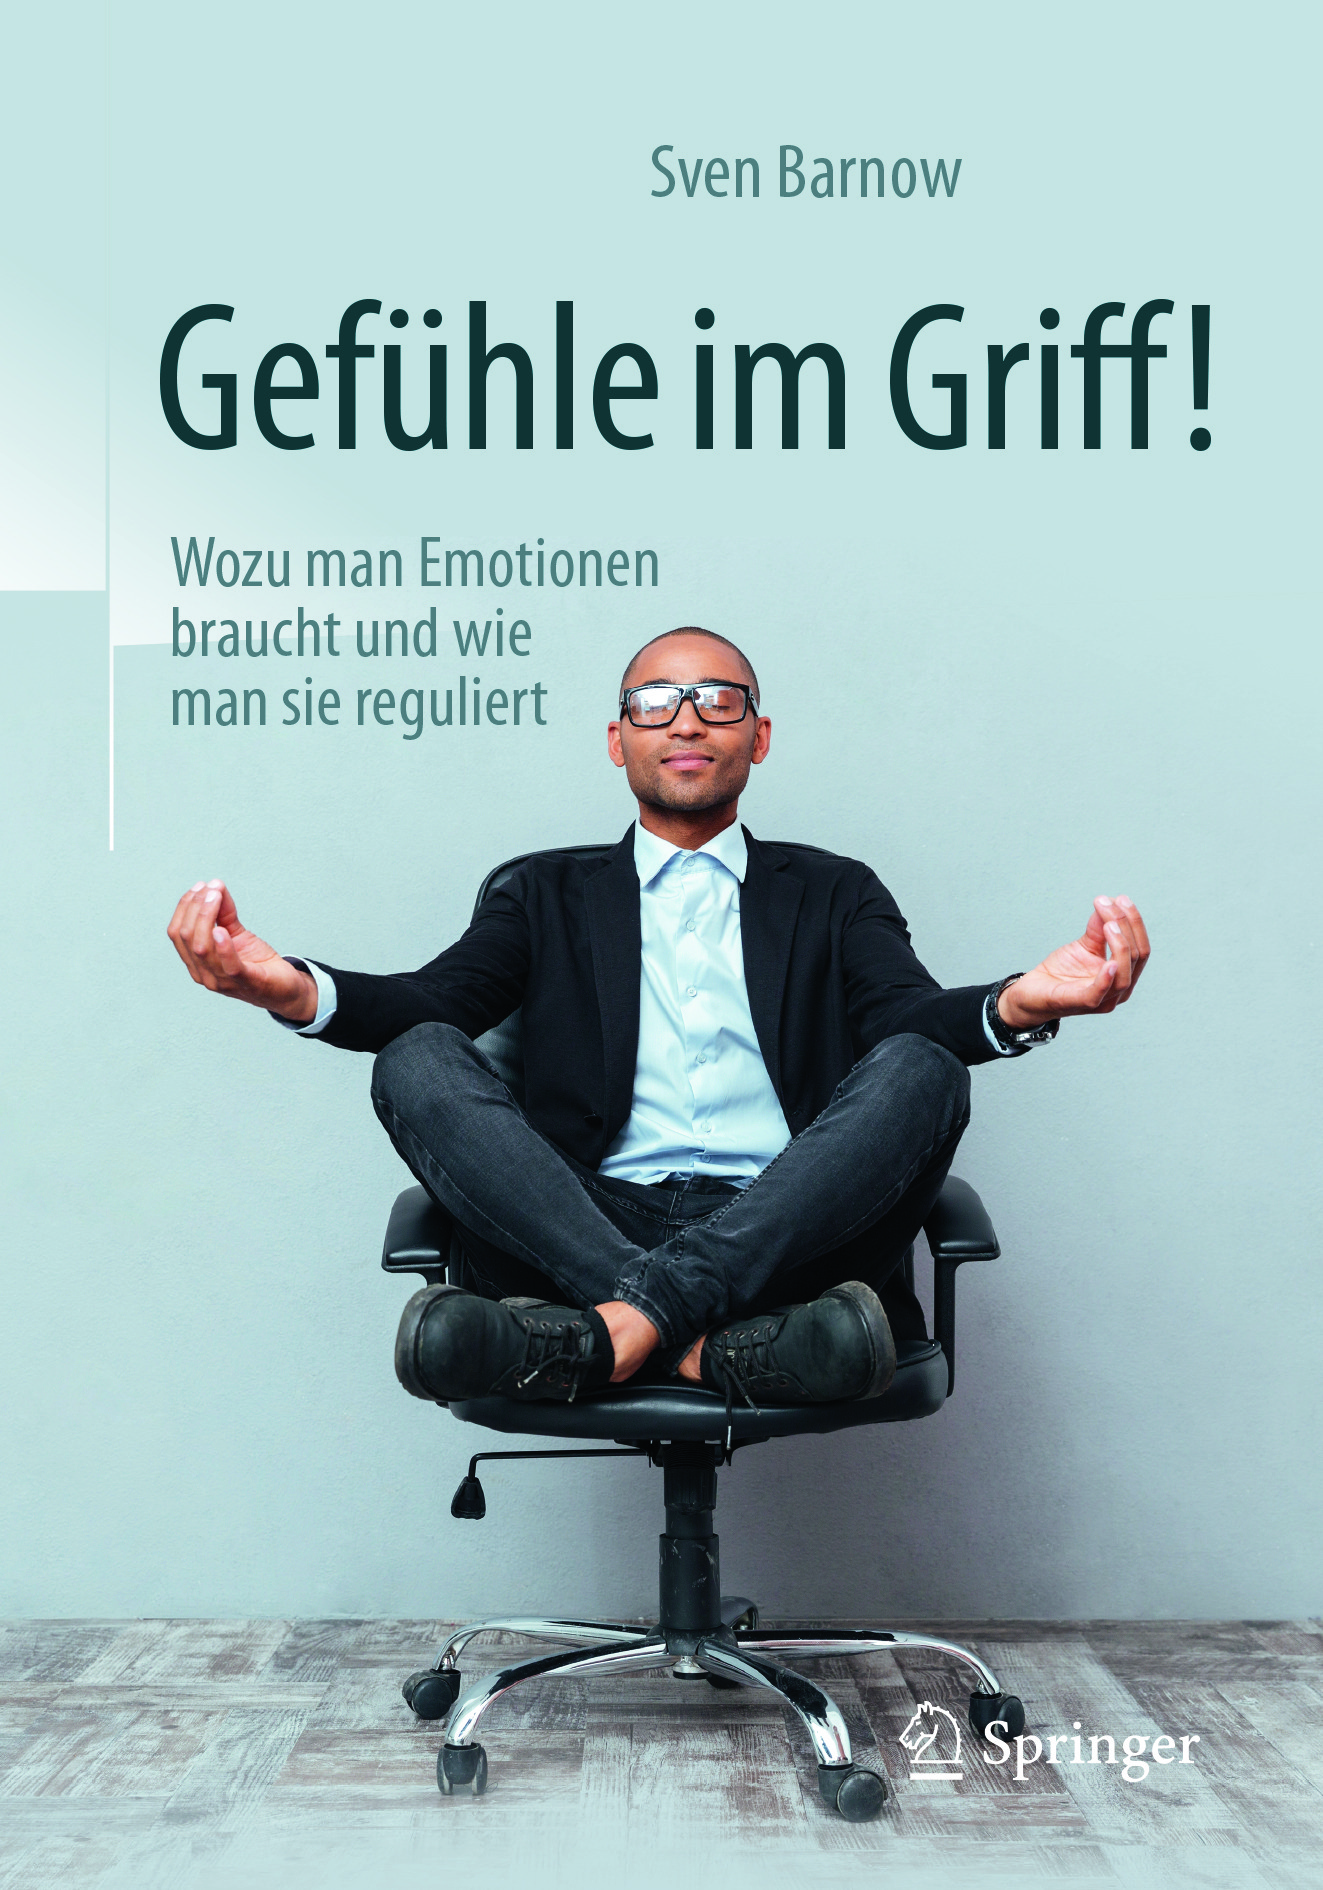 Barnow, Sven - Gefühle im Griff!, ebook